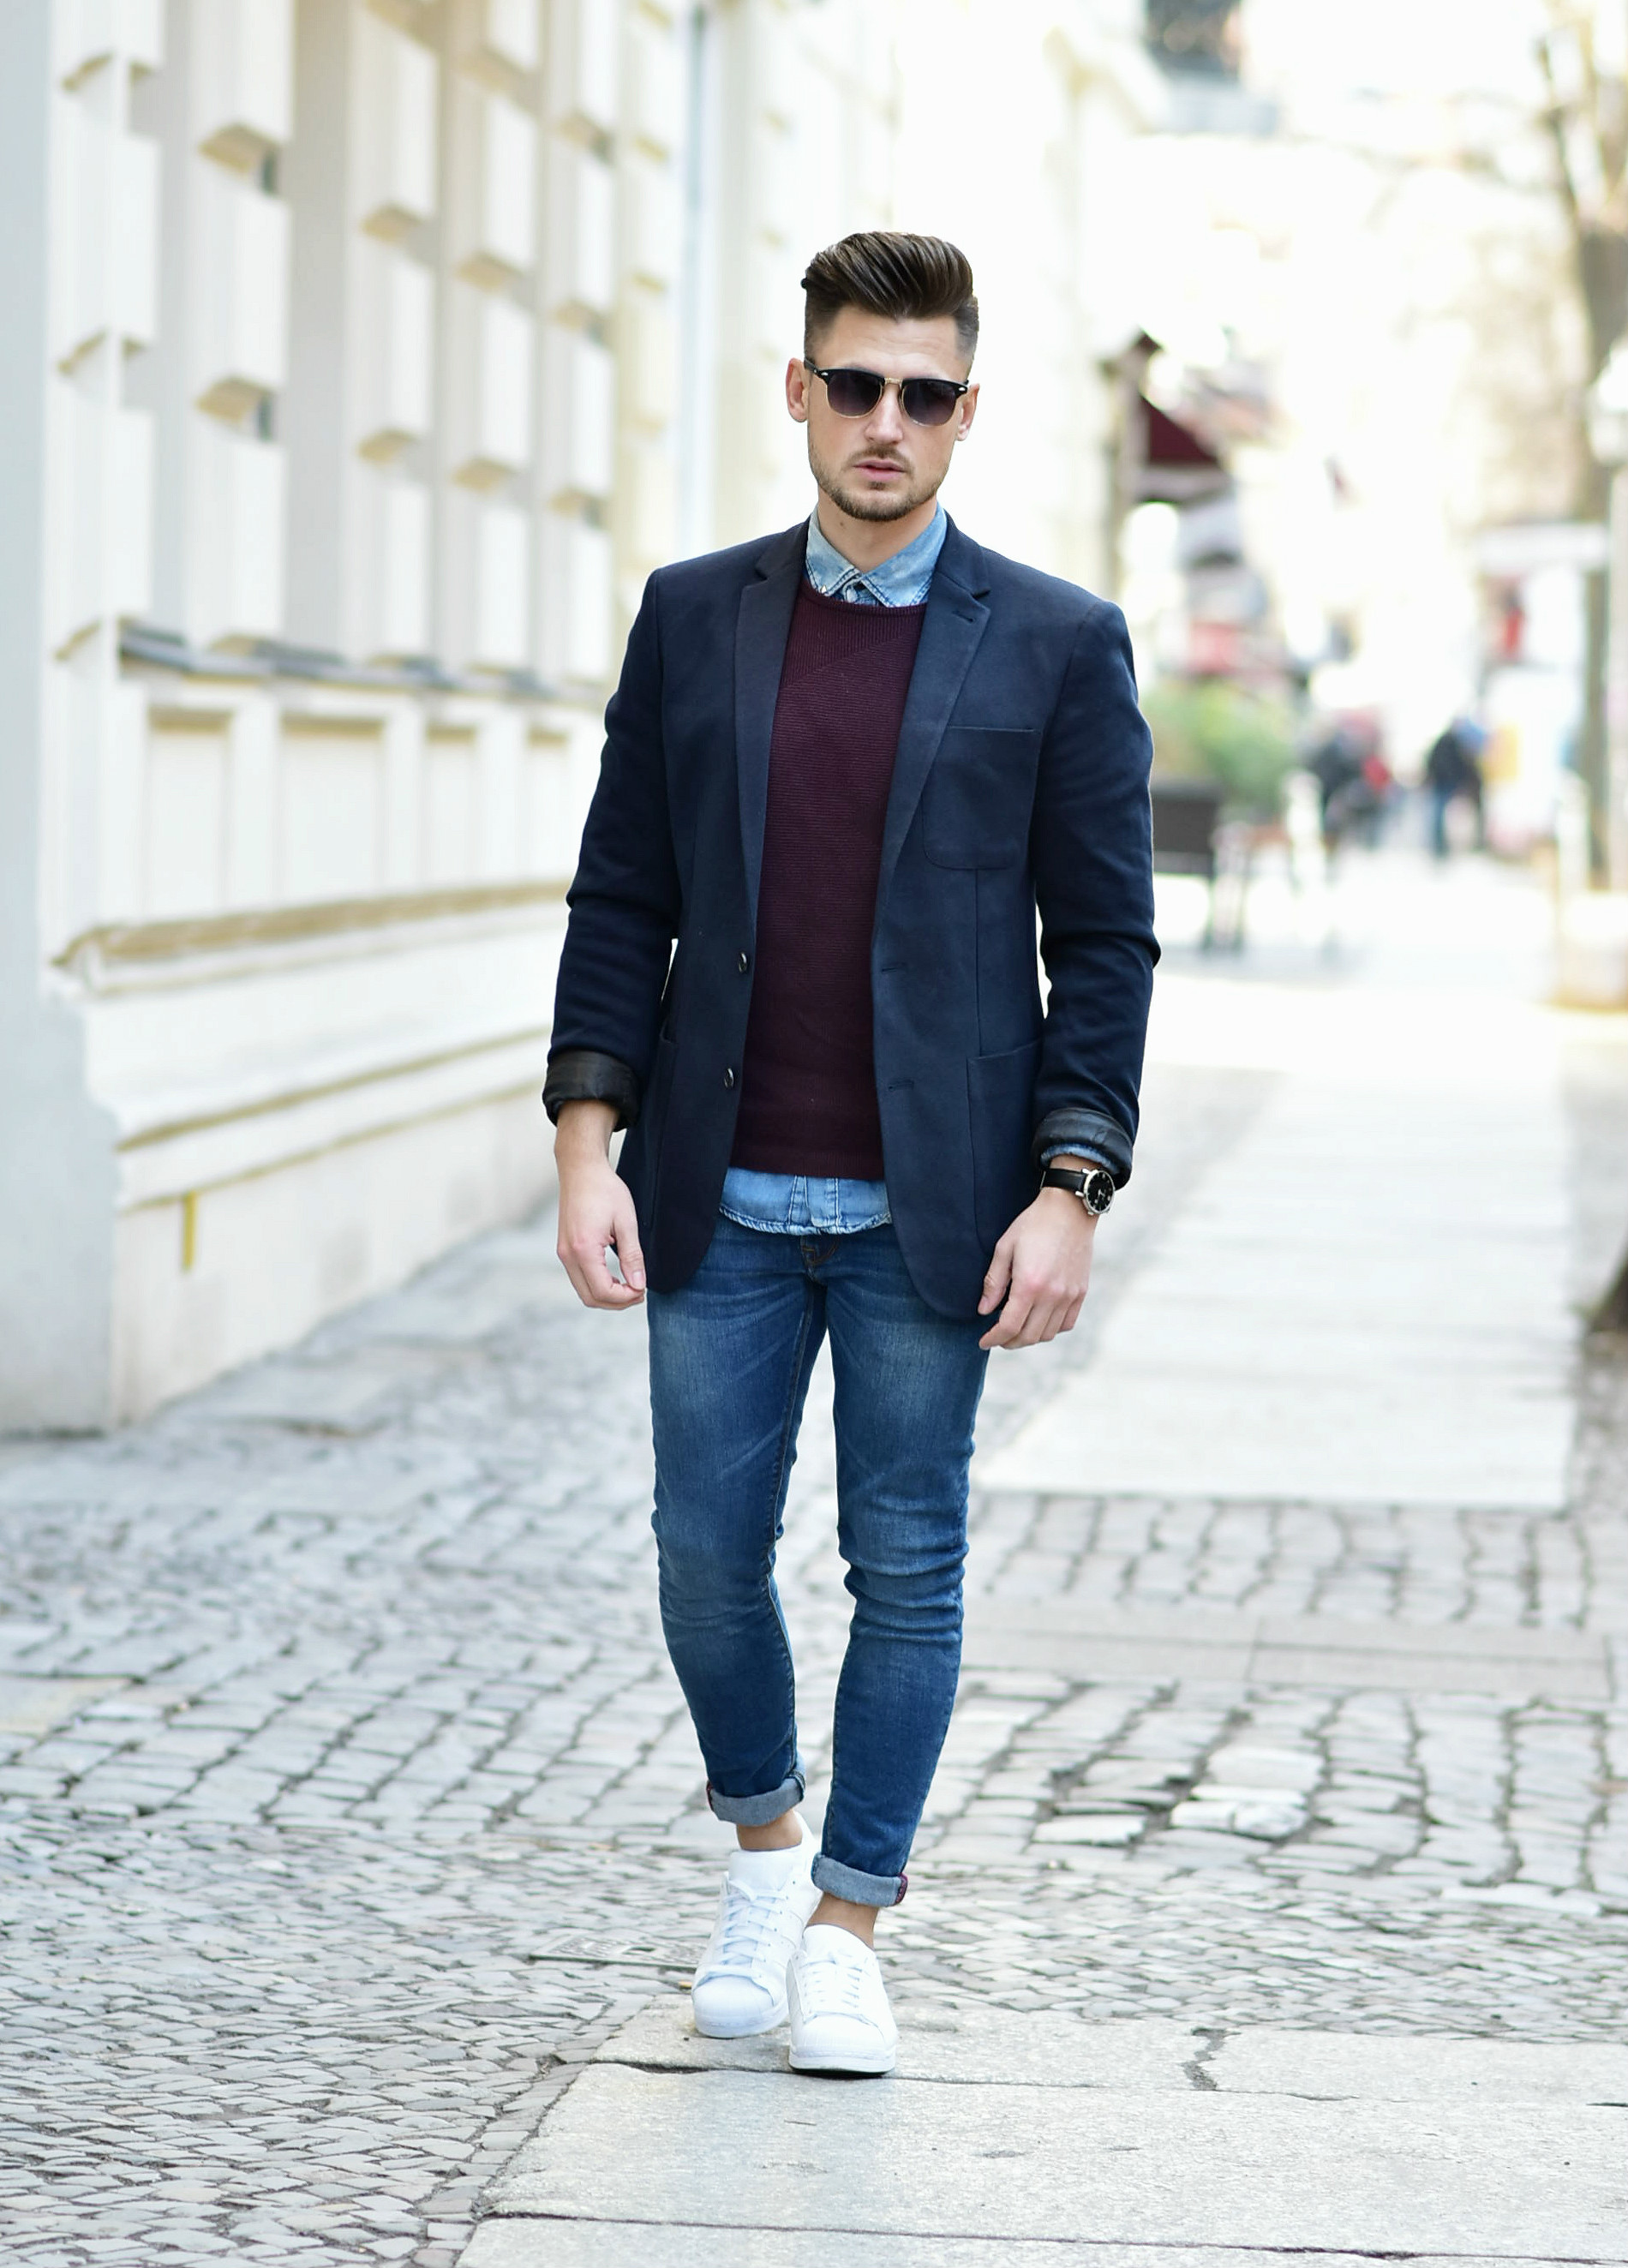 Tommeezjerry-Styleblog-Männerblog-Männer-Modeblog-Berlin-Berlinblog-Outfit-Streetlook-Skinny-Jeans-Roter-Sweater-Sonnenbrille-Jeanshemd-Adidas-Superstar-Blazer-Smart-Look-Denim-Look